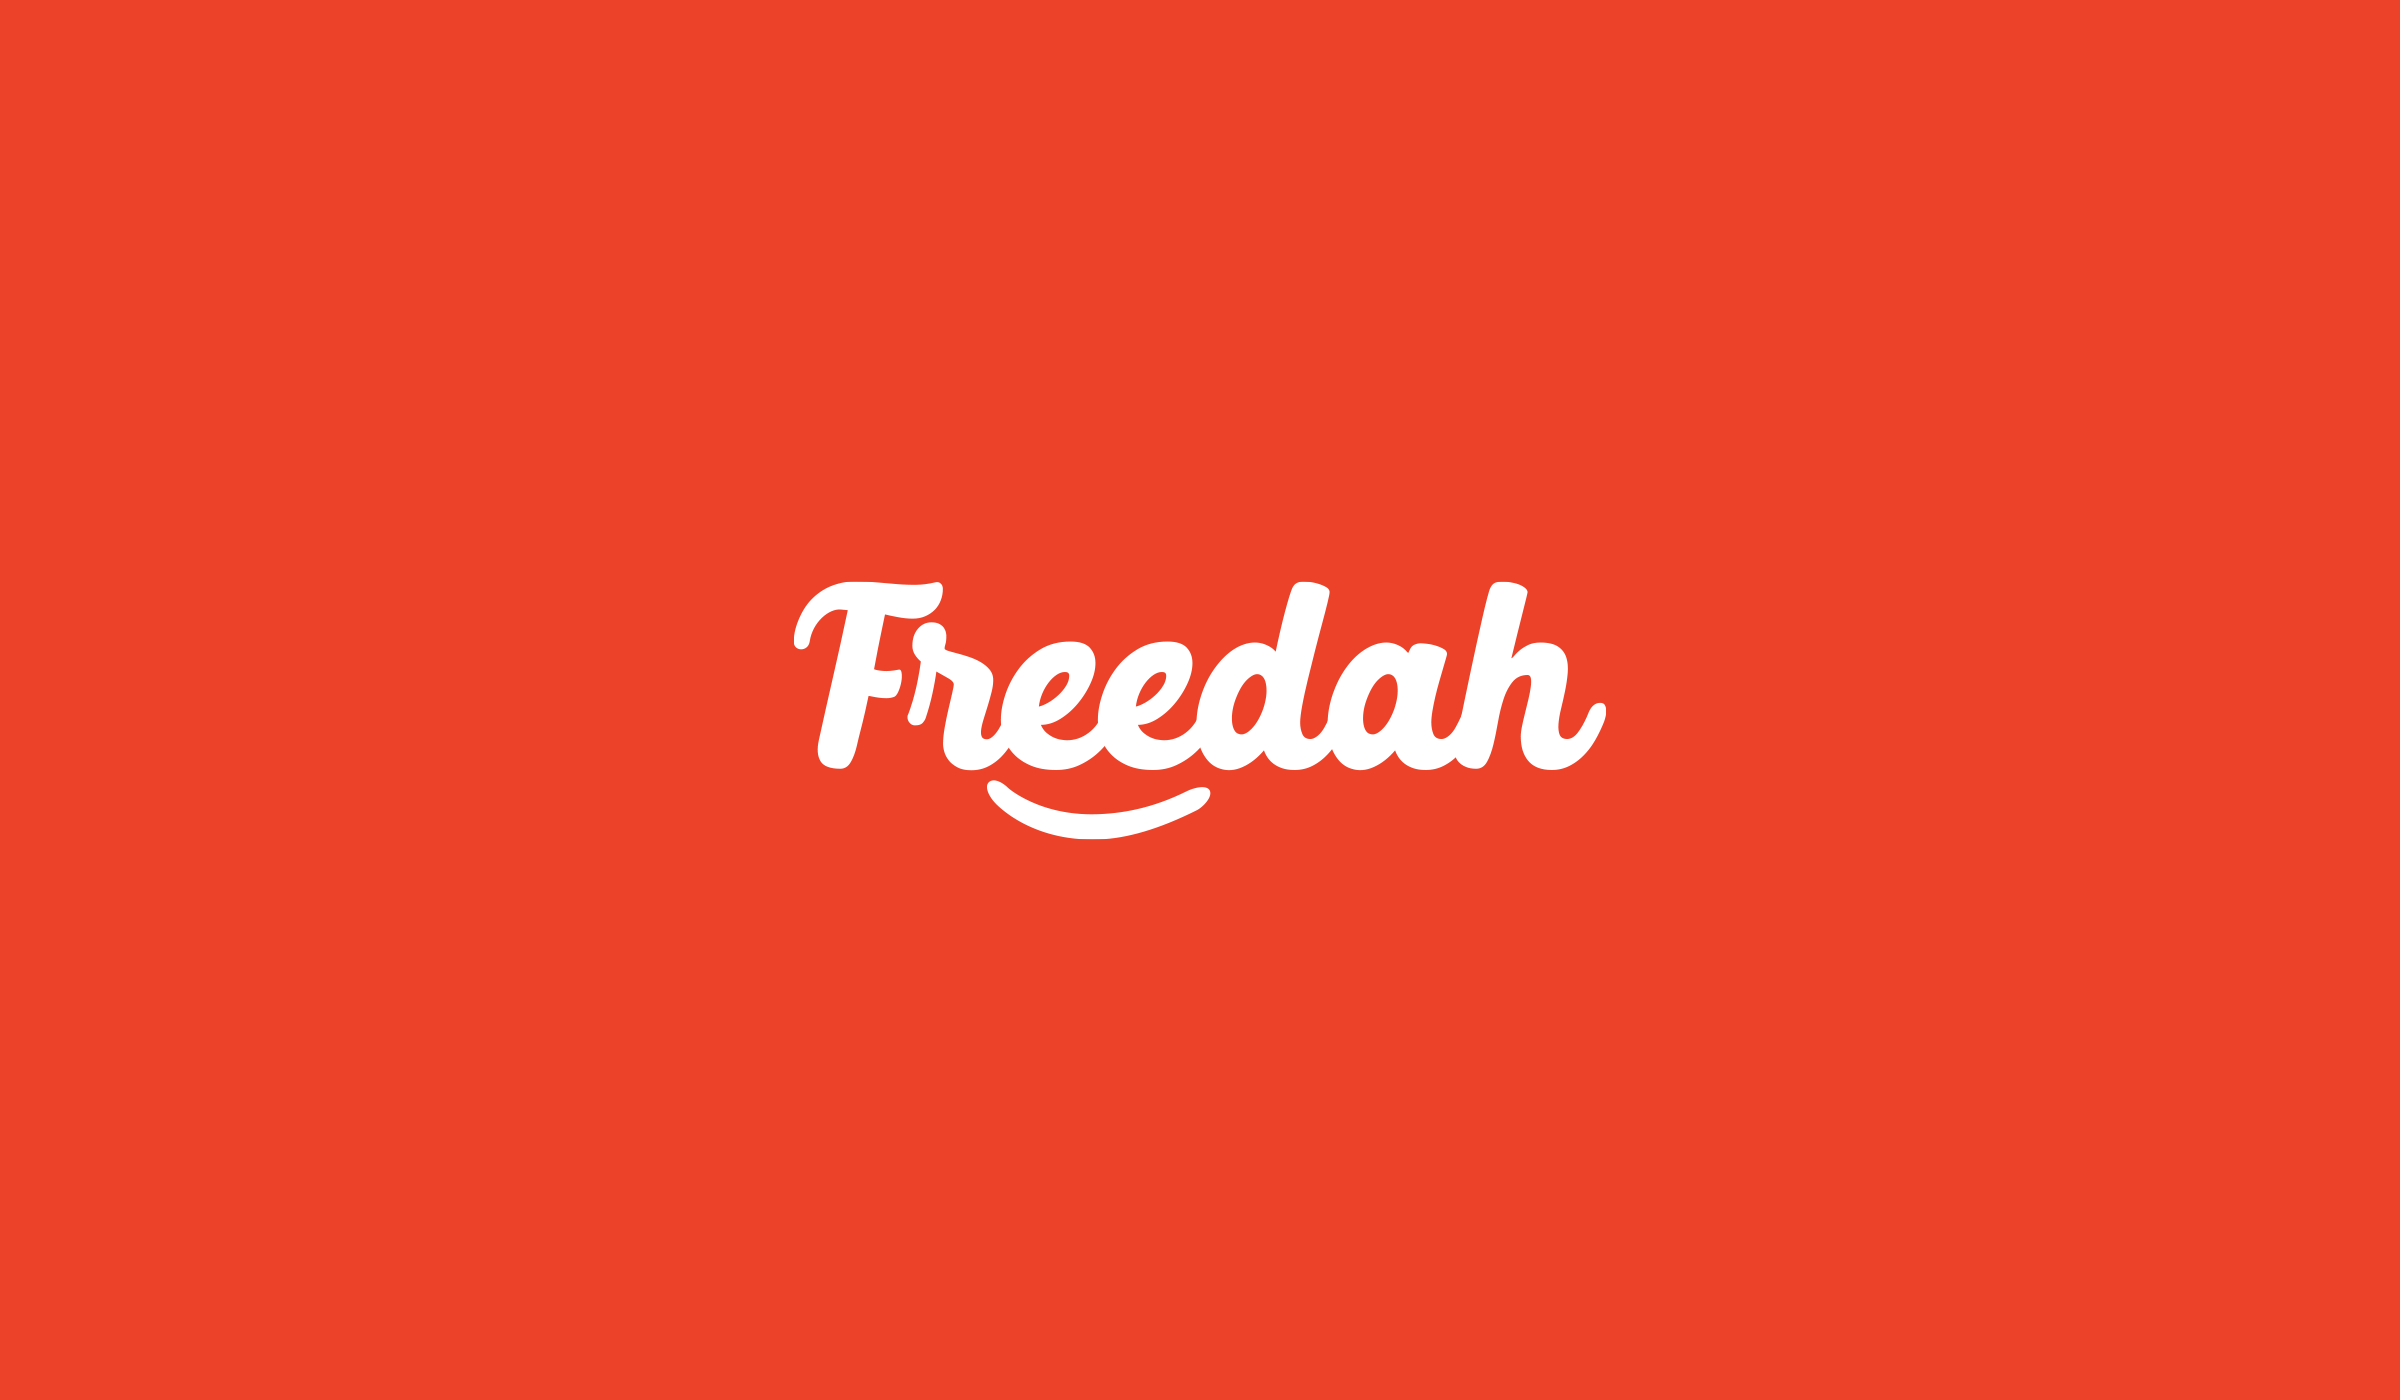 freedah.com